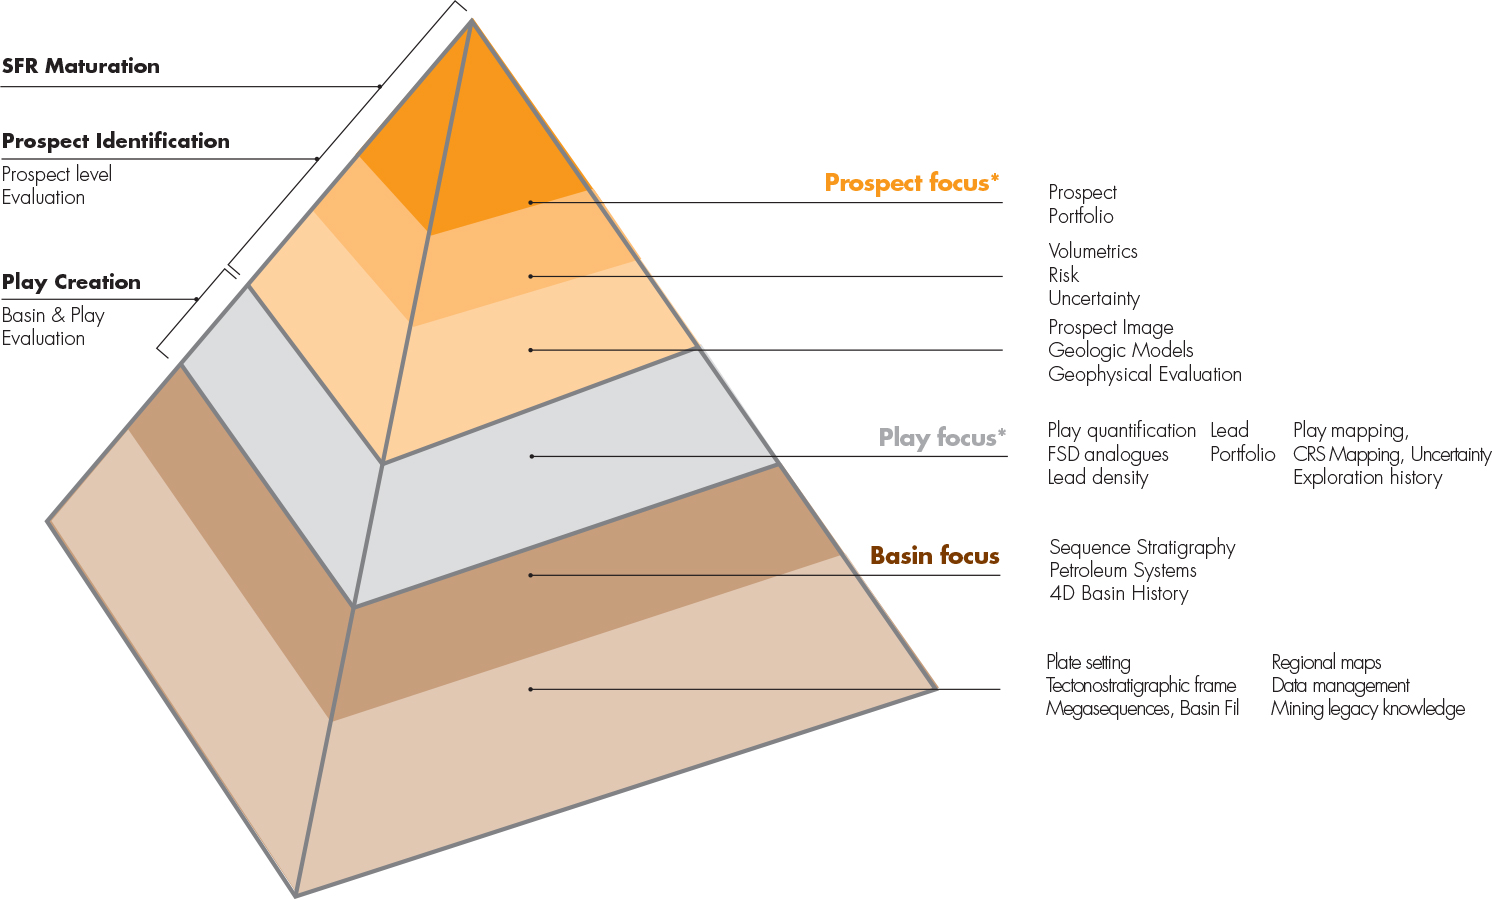 The Play-Based Exploration Pyramid (Royal Dutch Shell, 2014)